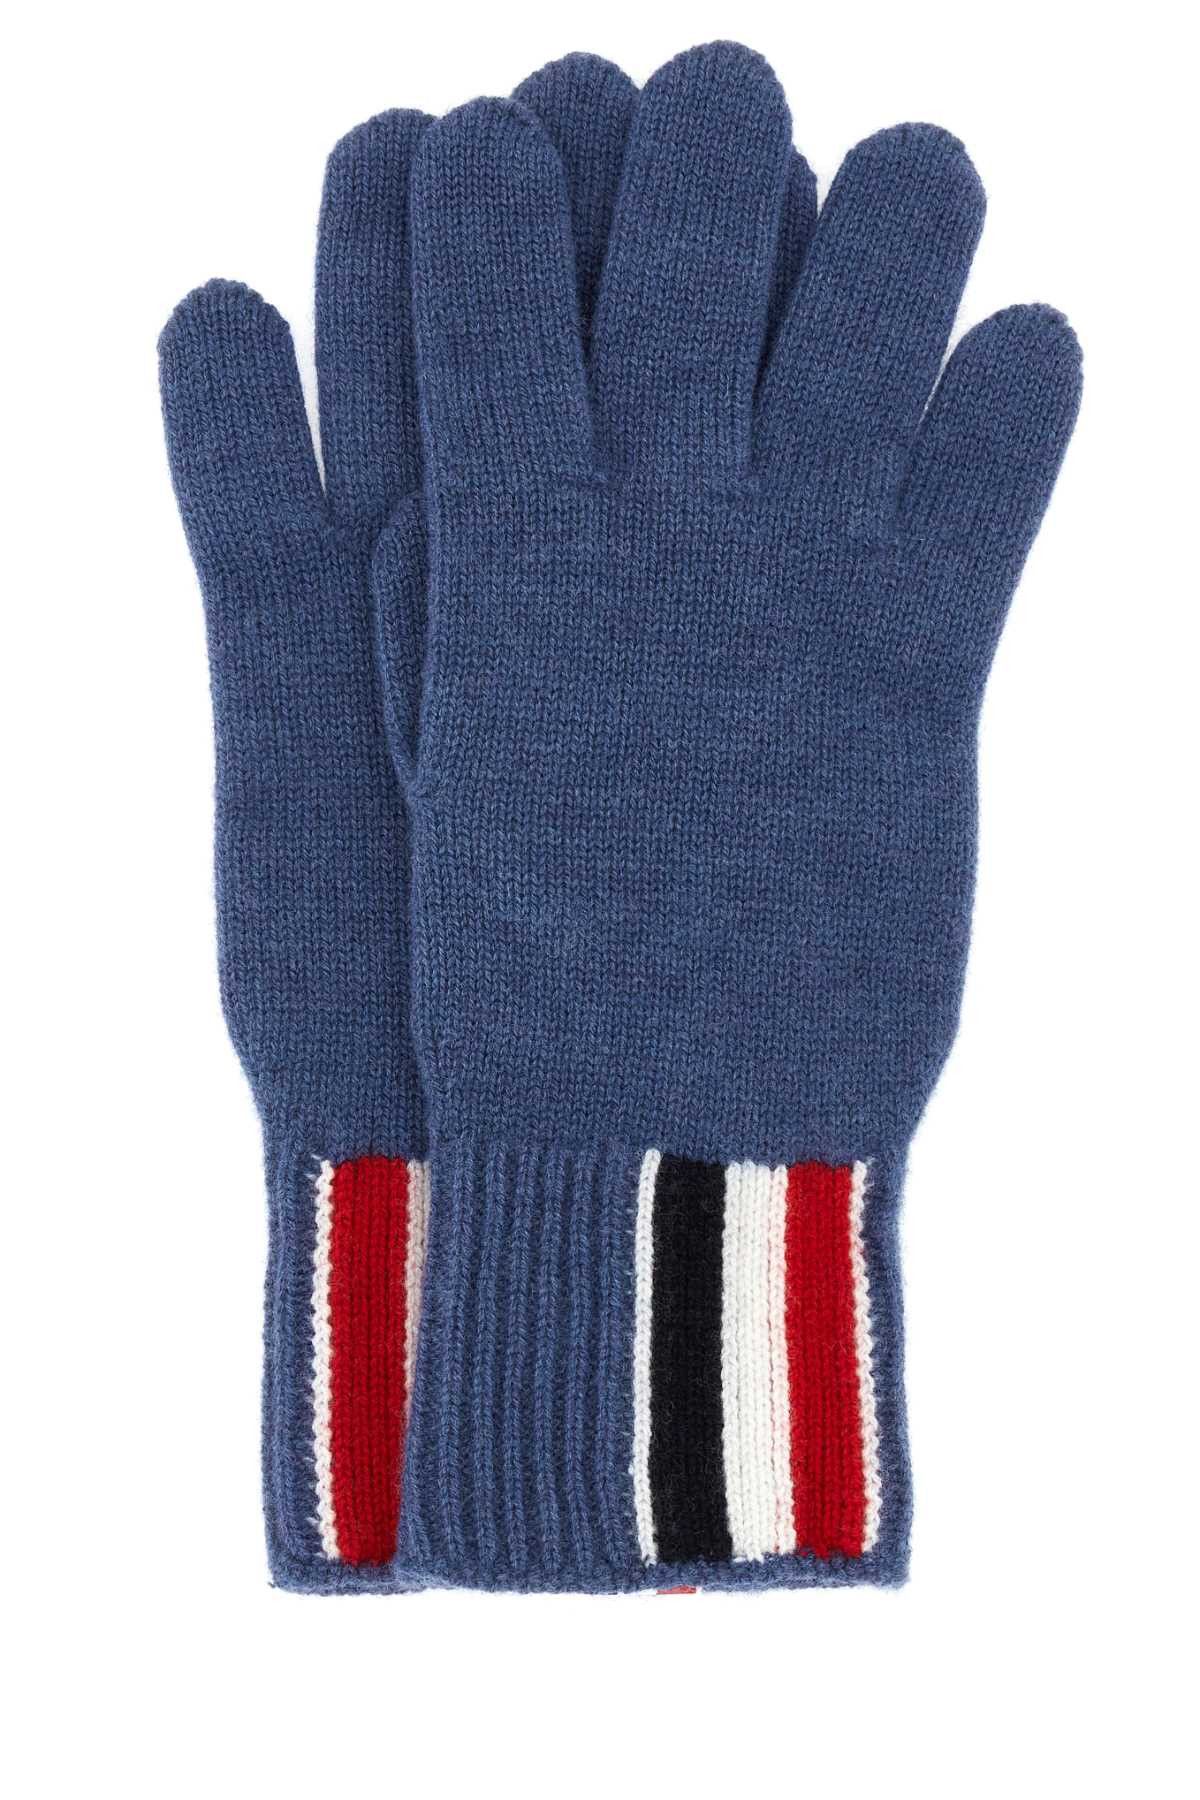 Thom Browne Air Force Blue Wool Gloves | Grailed